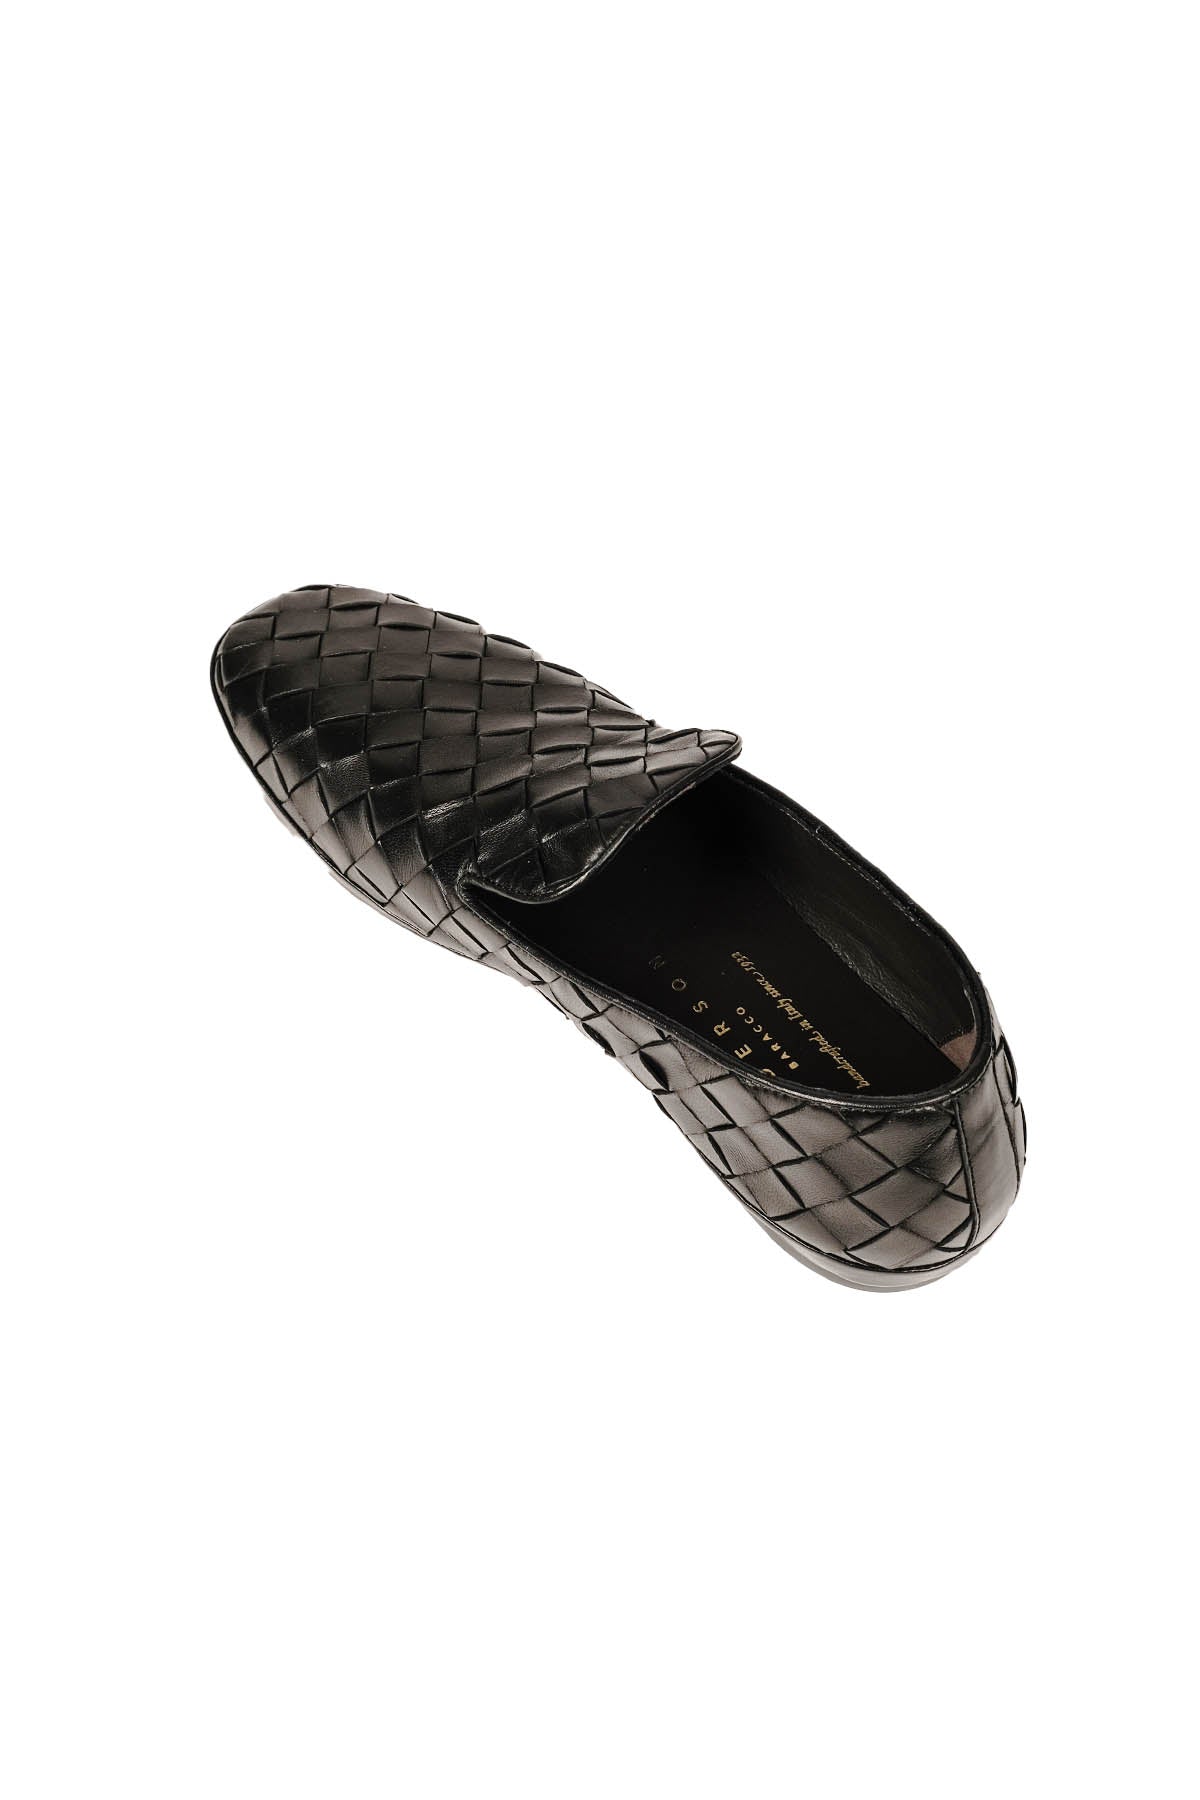 Henderson Gunea Örgü Deri Loafer Ayakkabı-Libas Trendy Fashion Store